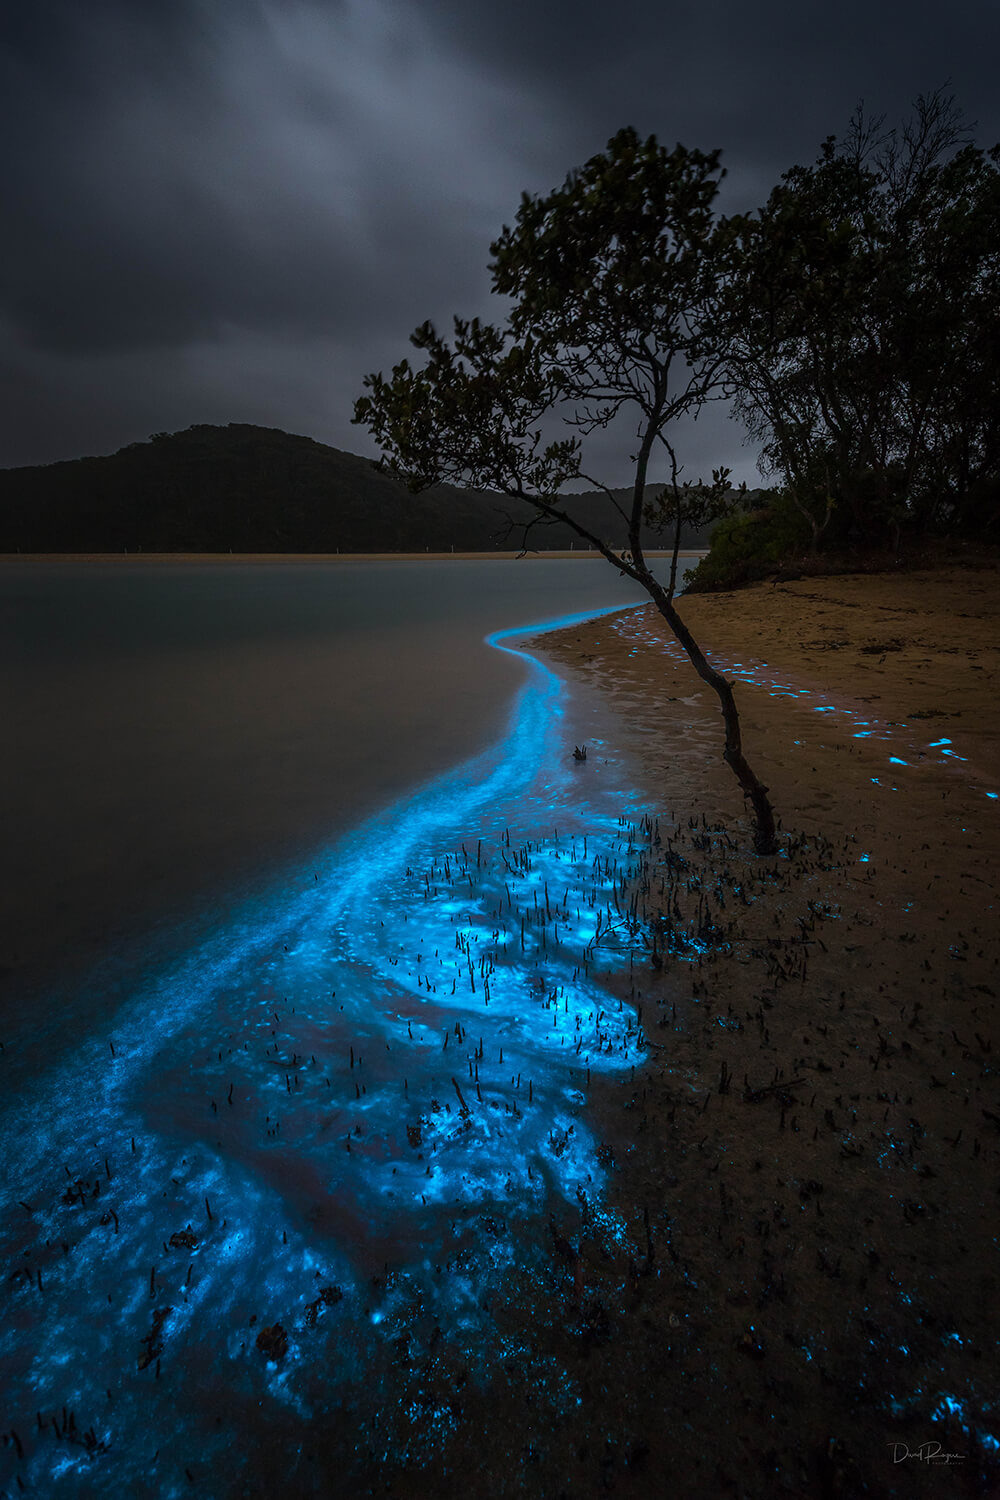 A mesmerising display of bioluminescence